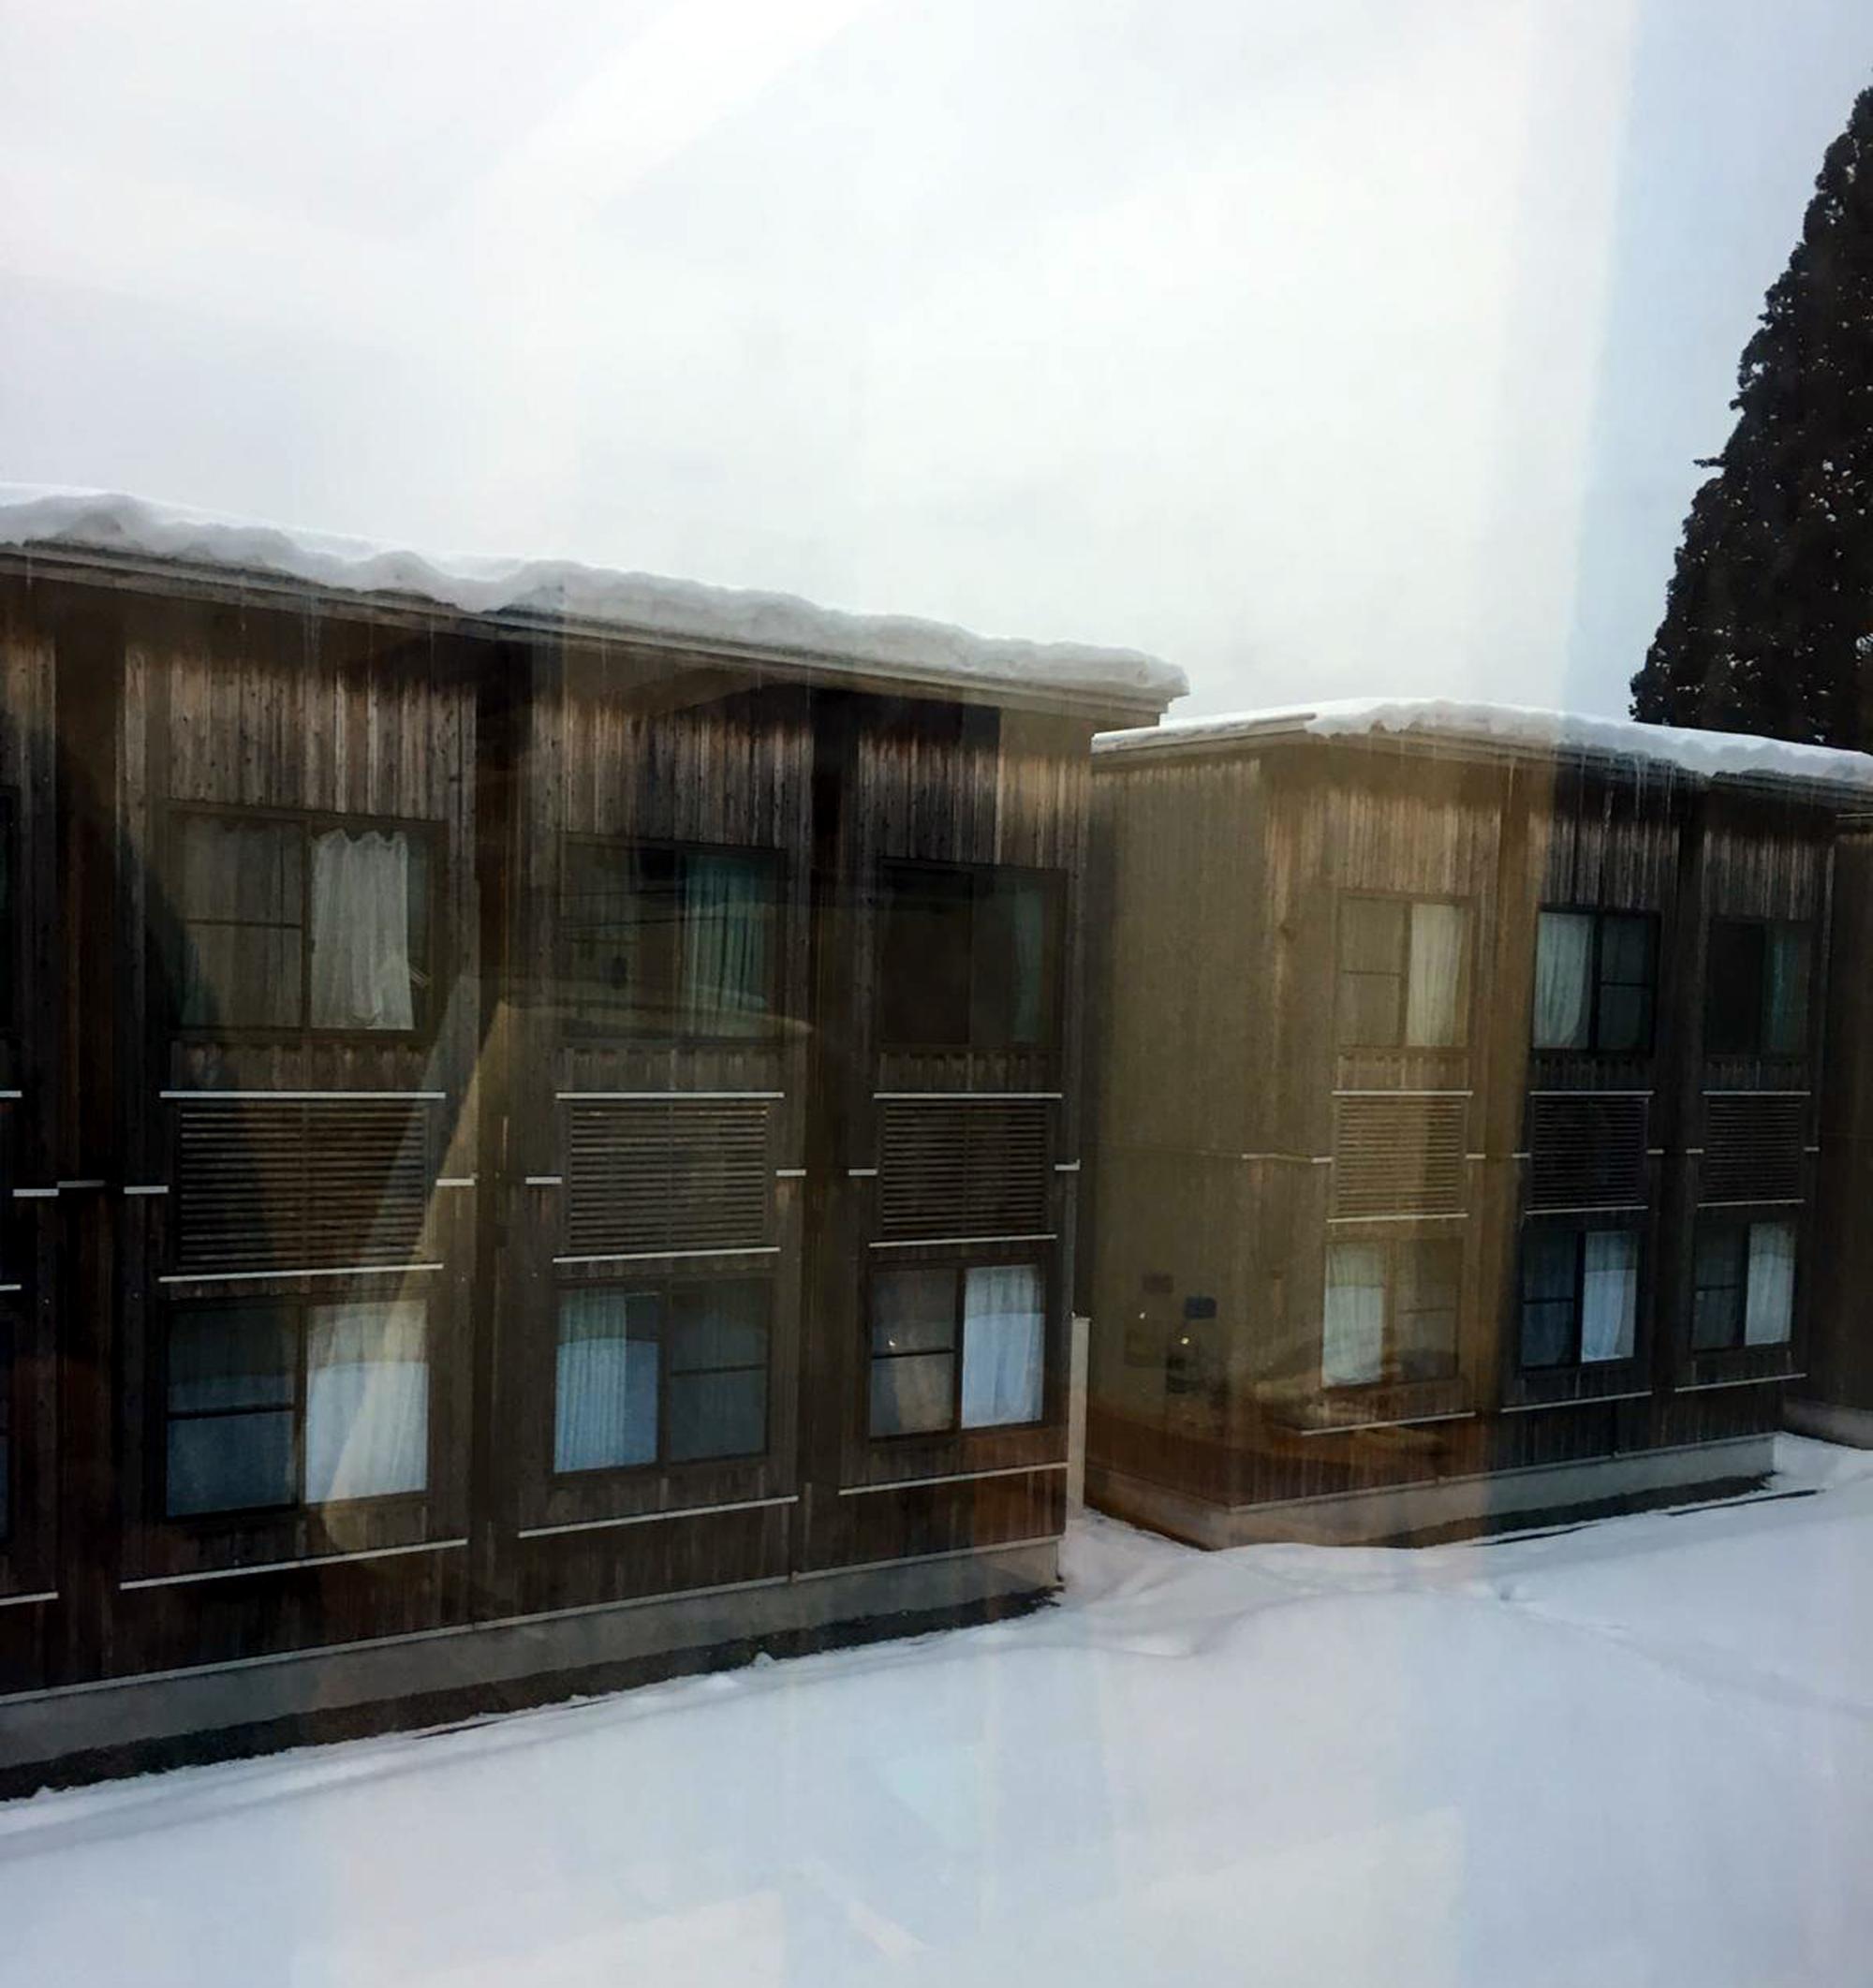 Japan (2019) - Snowy Dorms #2